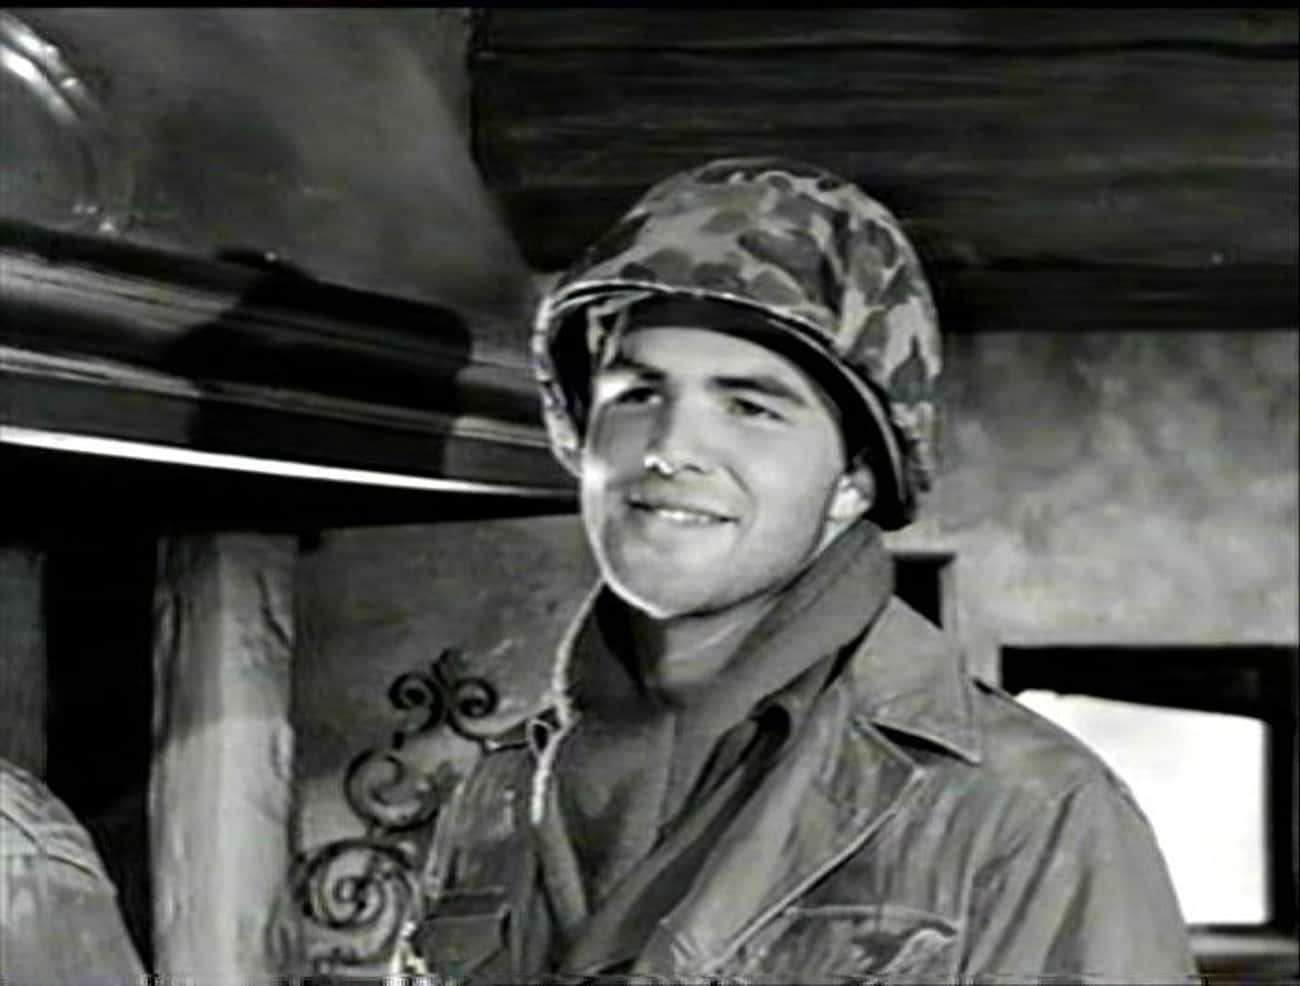 Young Burt Reynolds in Military Attire